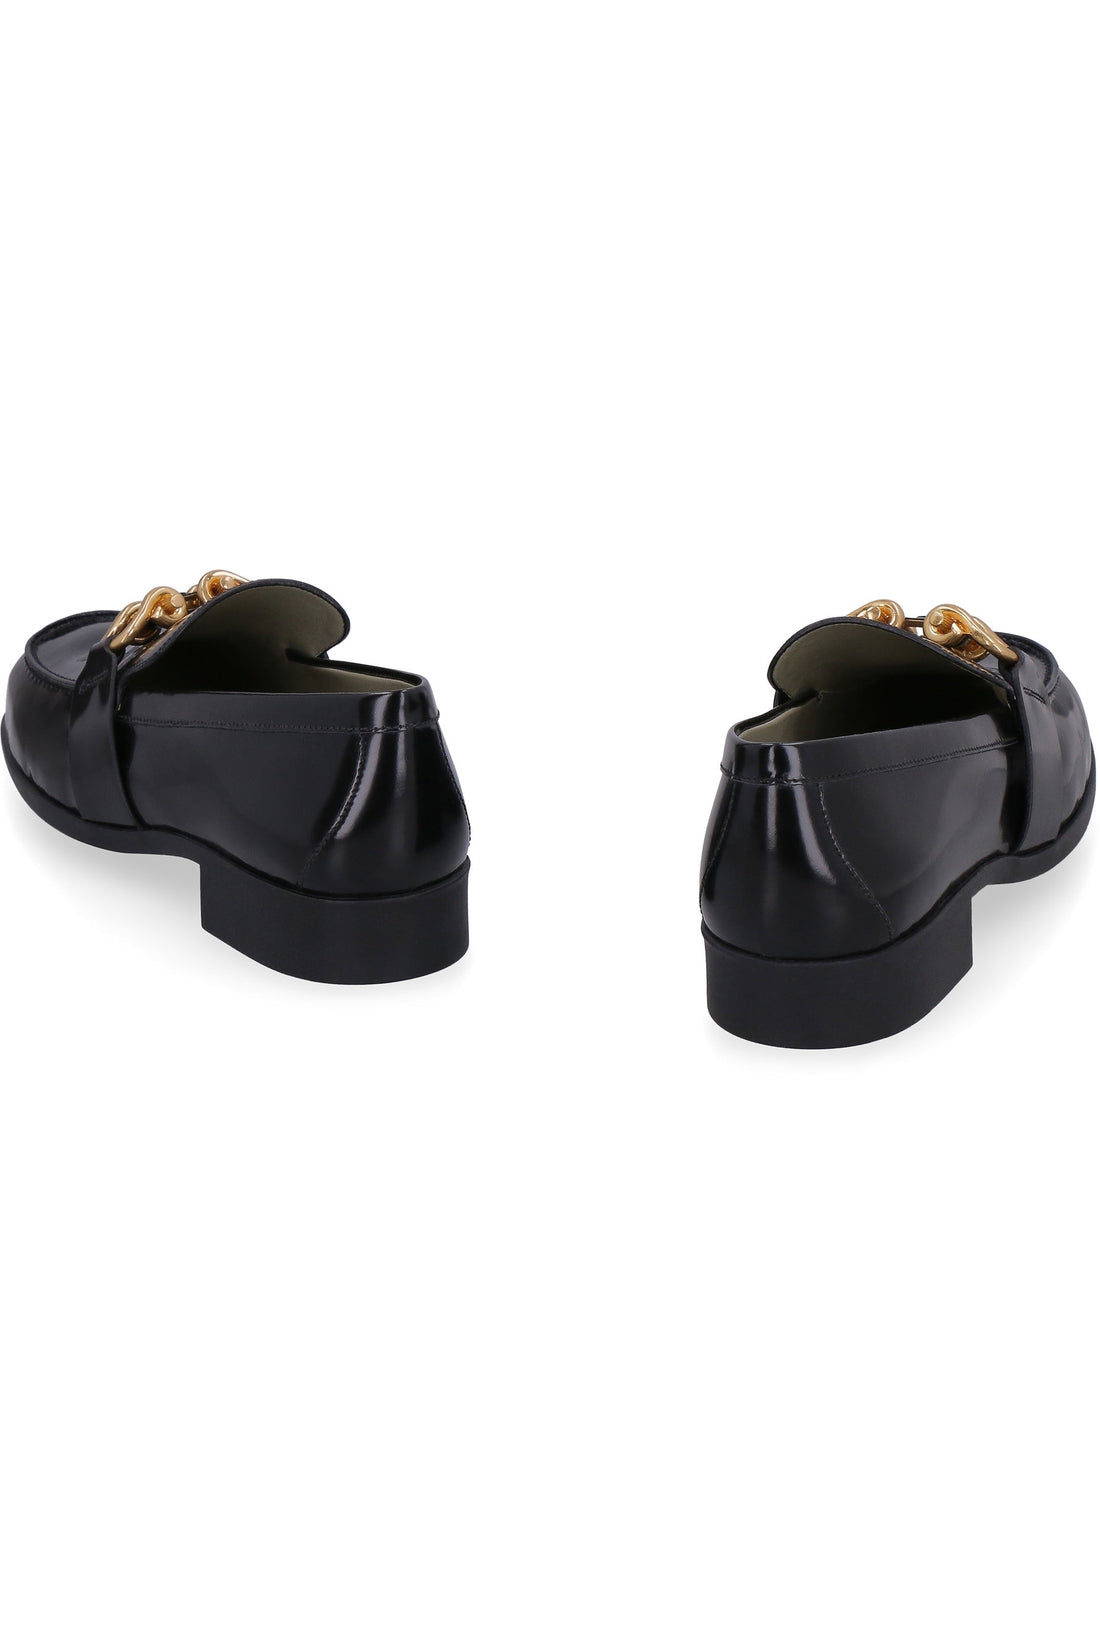 Bottega Veneta-OUTLET-SALE-Monsieur leather loafers-ARCHIVIST